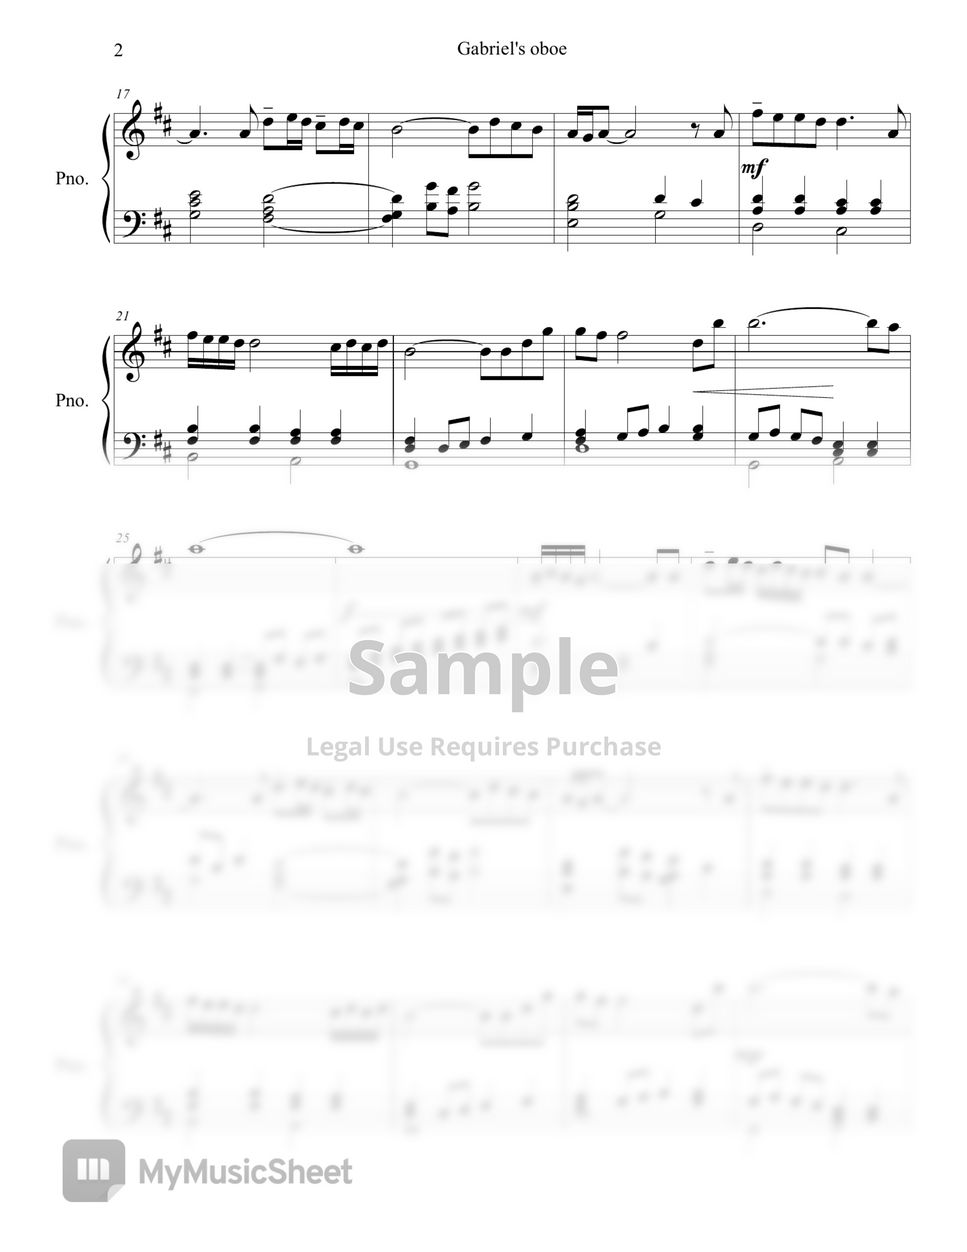 Ennio Morricone - Gabriel's oboe (Nella Fantasia) by Lisamusic